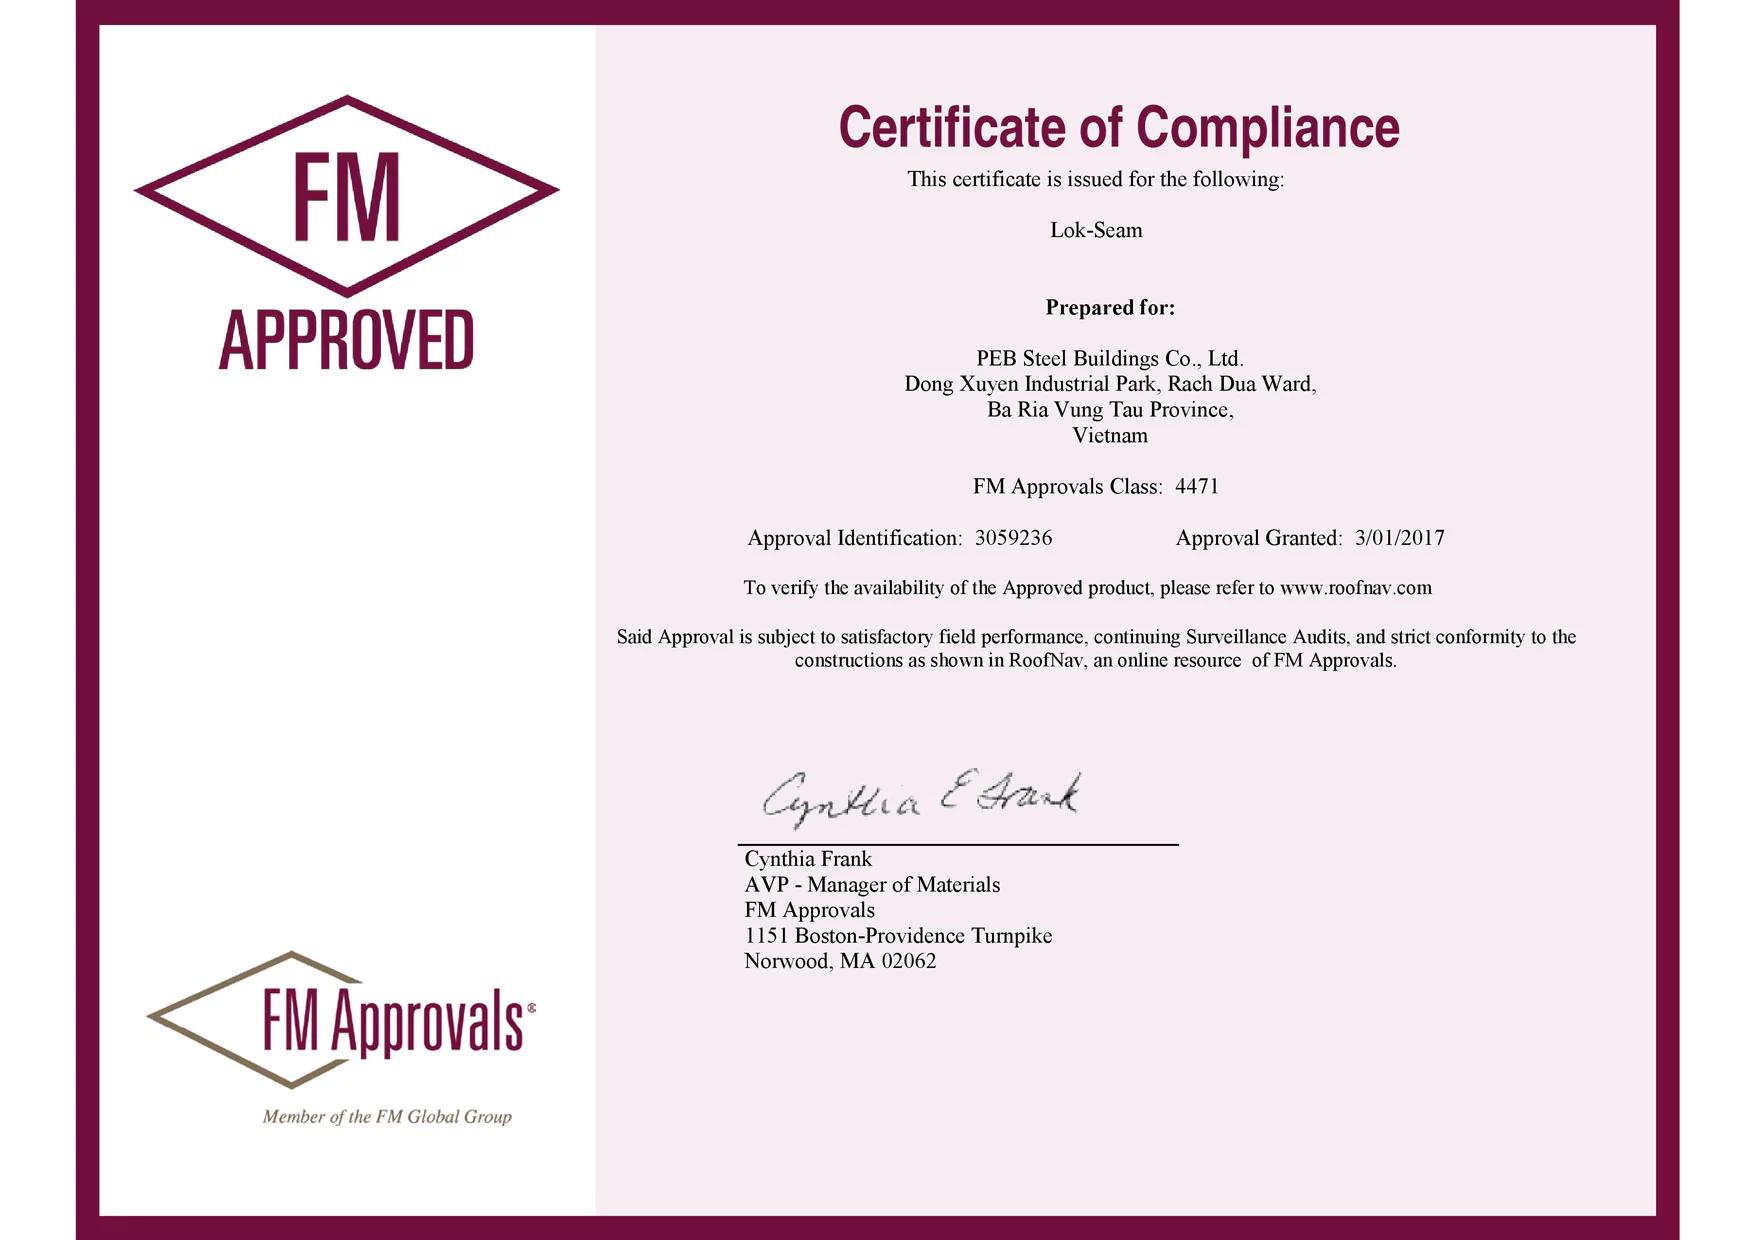 FM Approved Certificate - Pebsteel